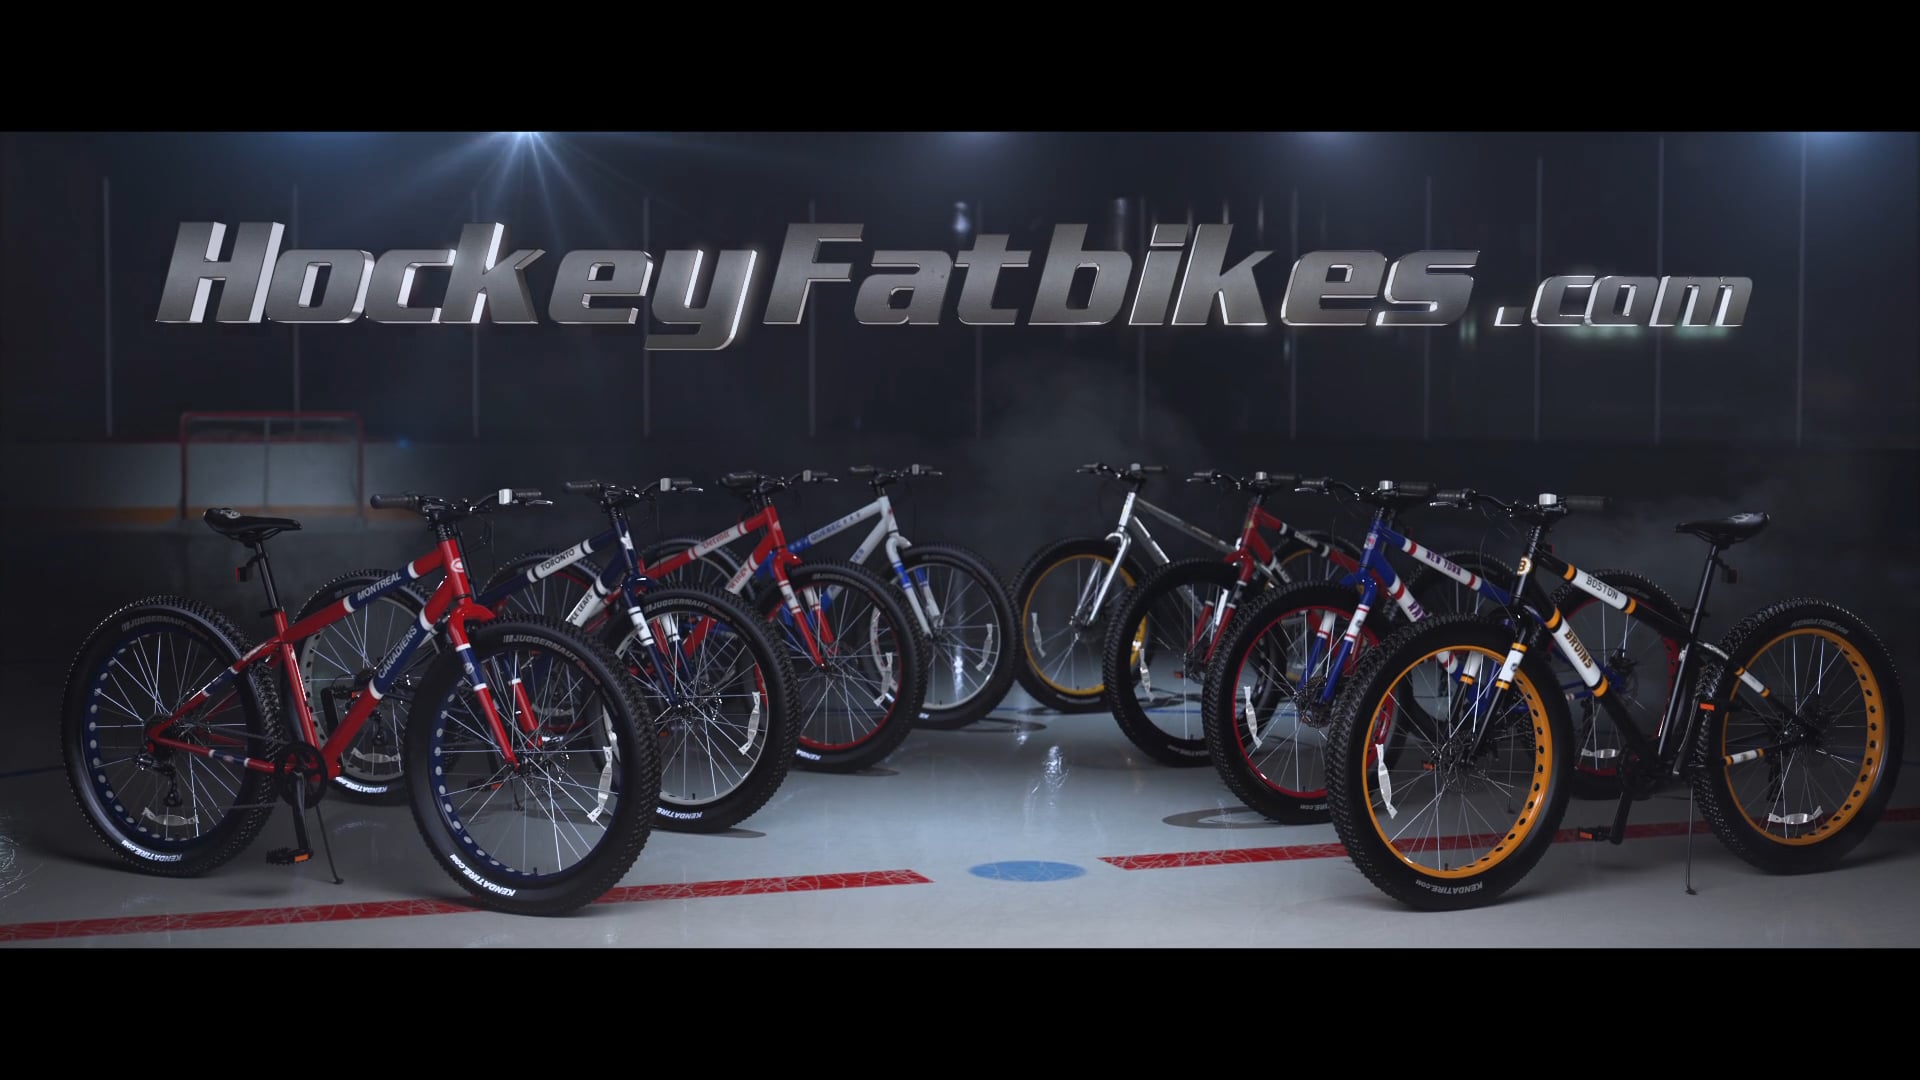 NHL commercial - Hockey Fat Bikes